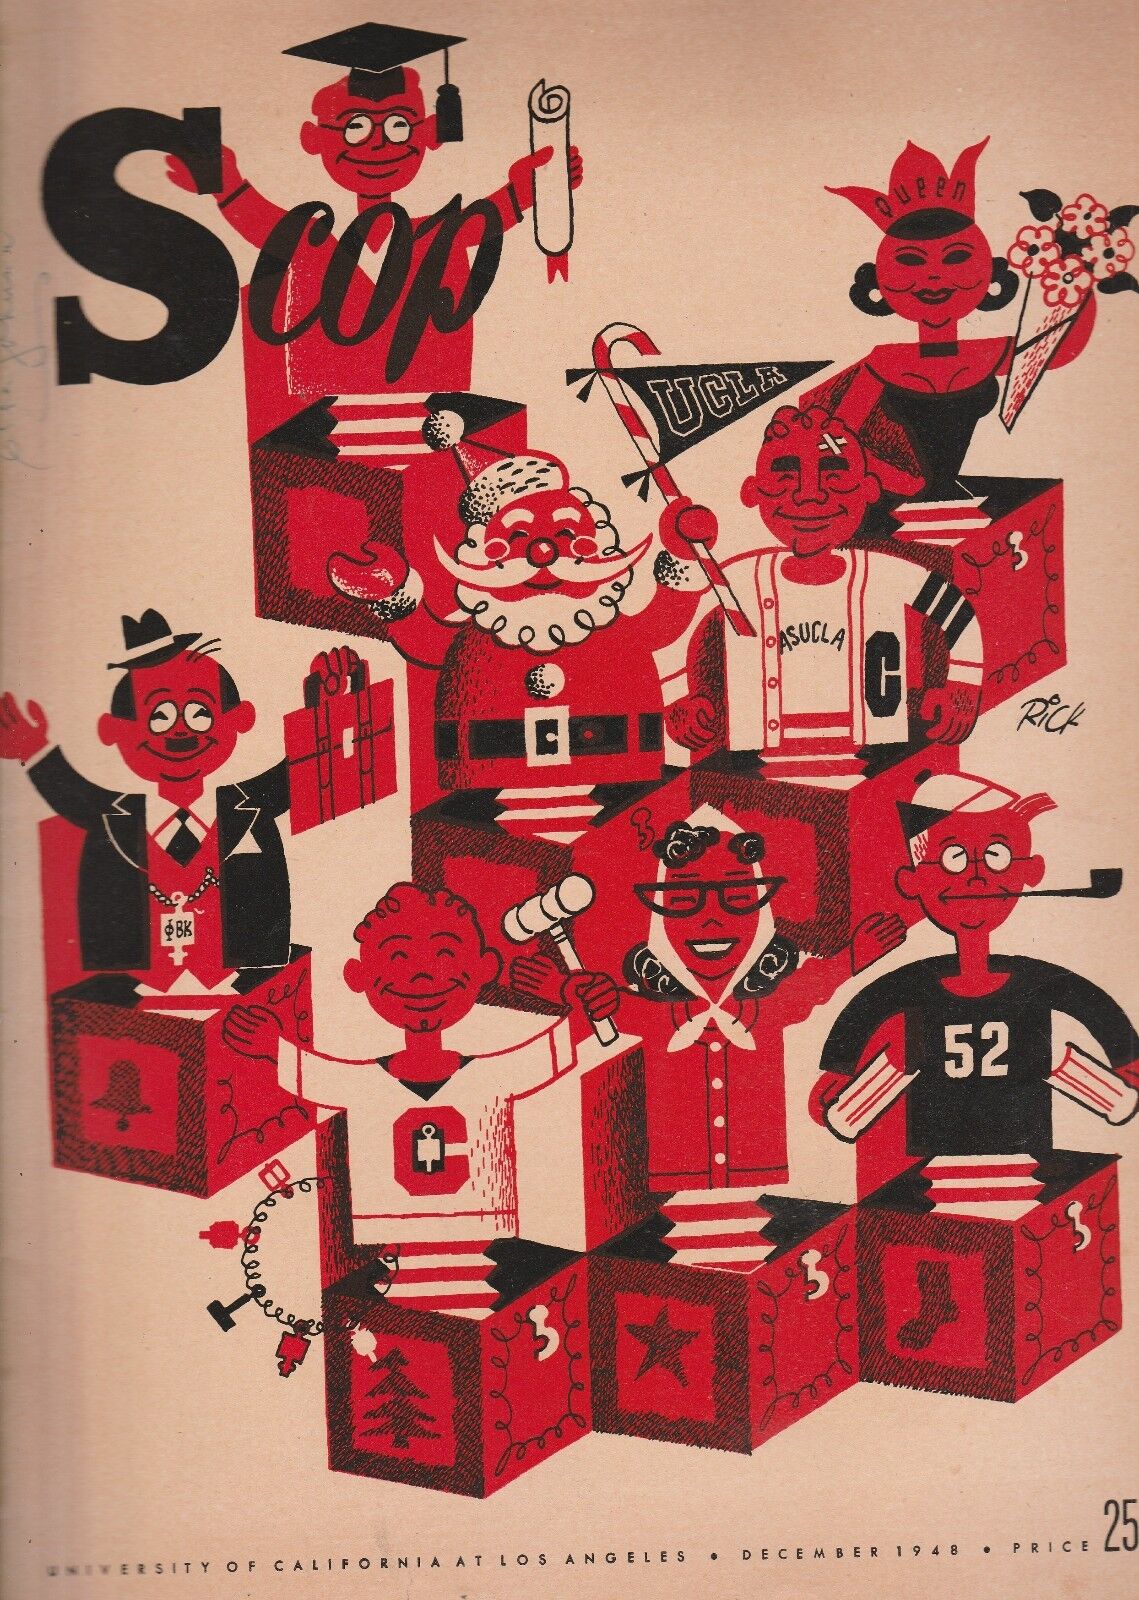 SCOP UCLA HUMOR MAGAZINE DECEMBER 1948